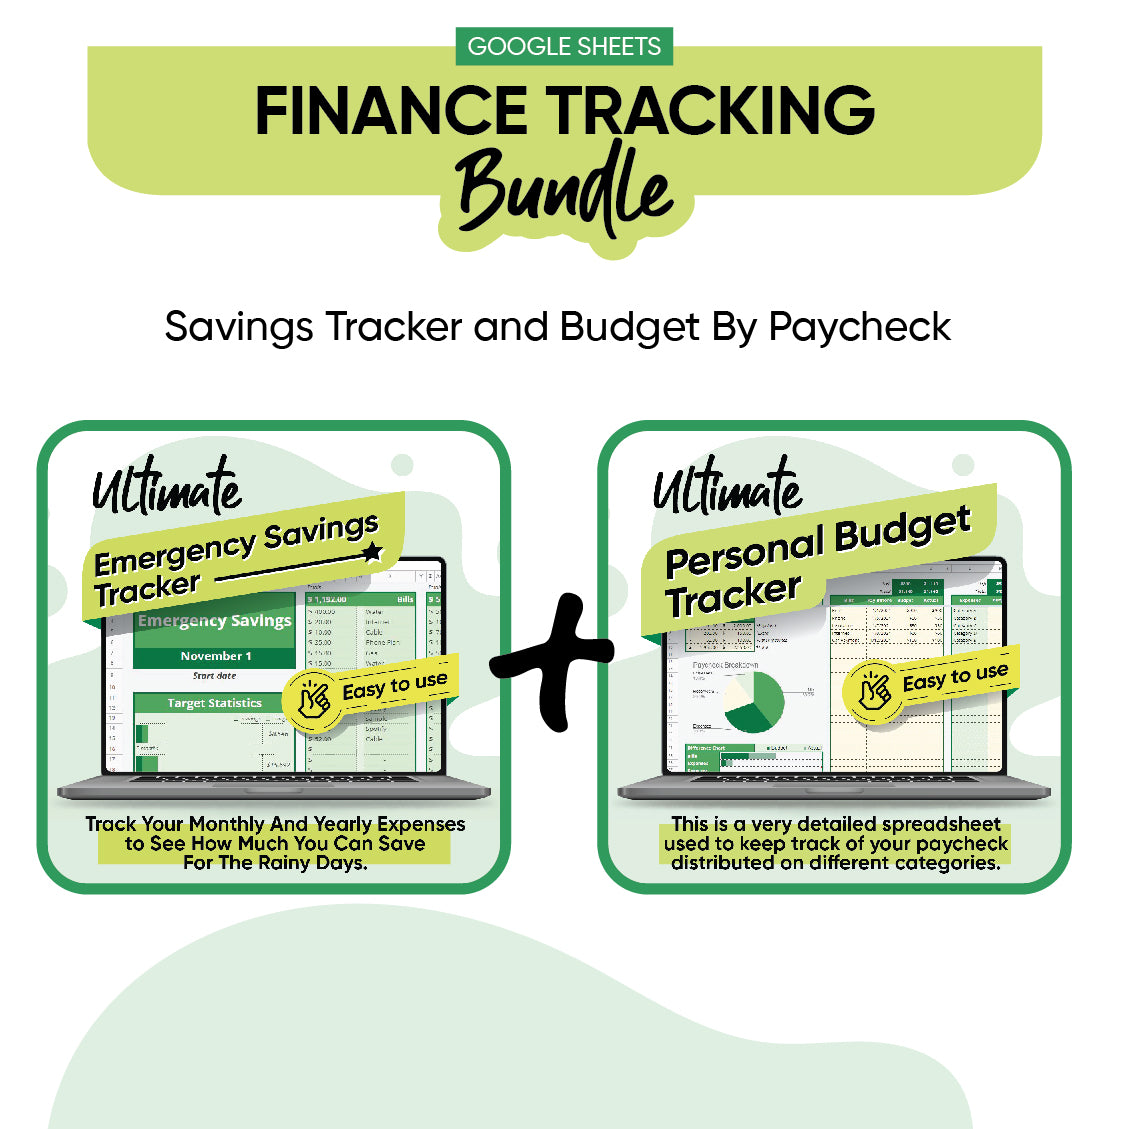 Finance Tracking Bundle